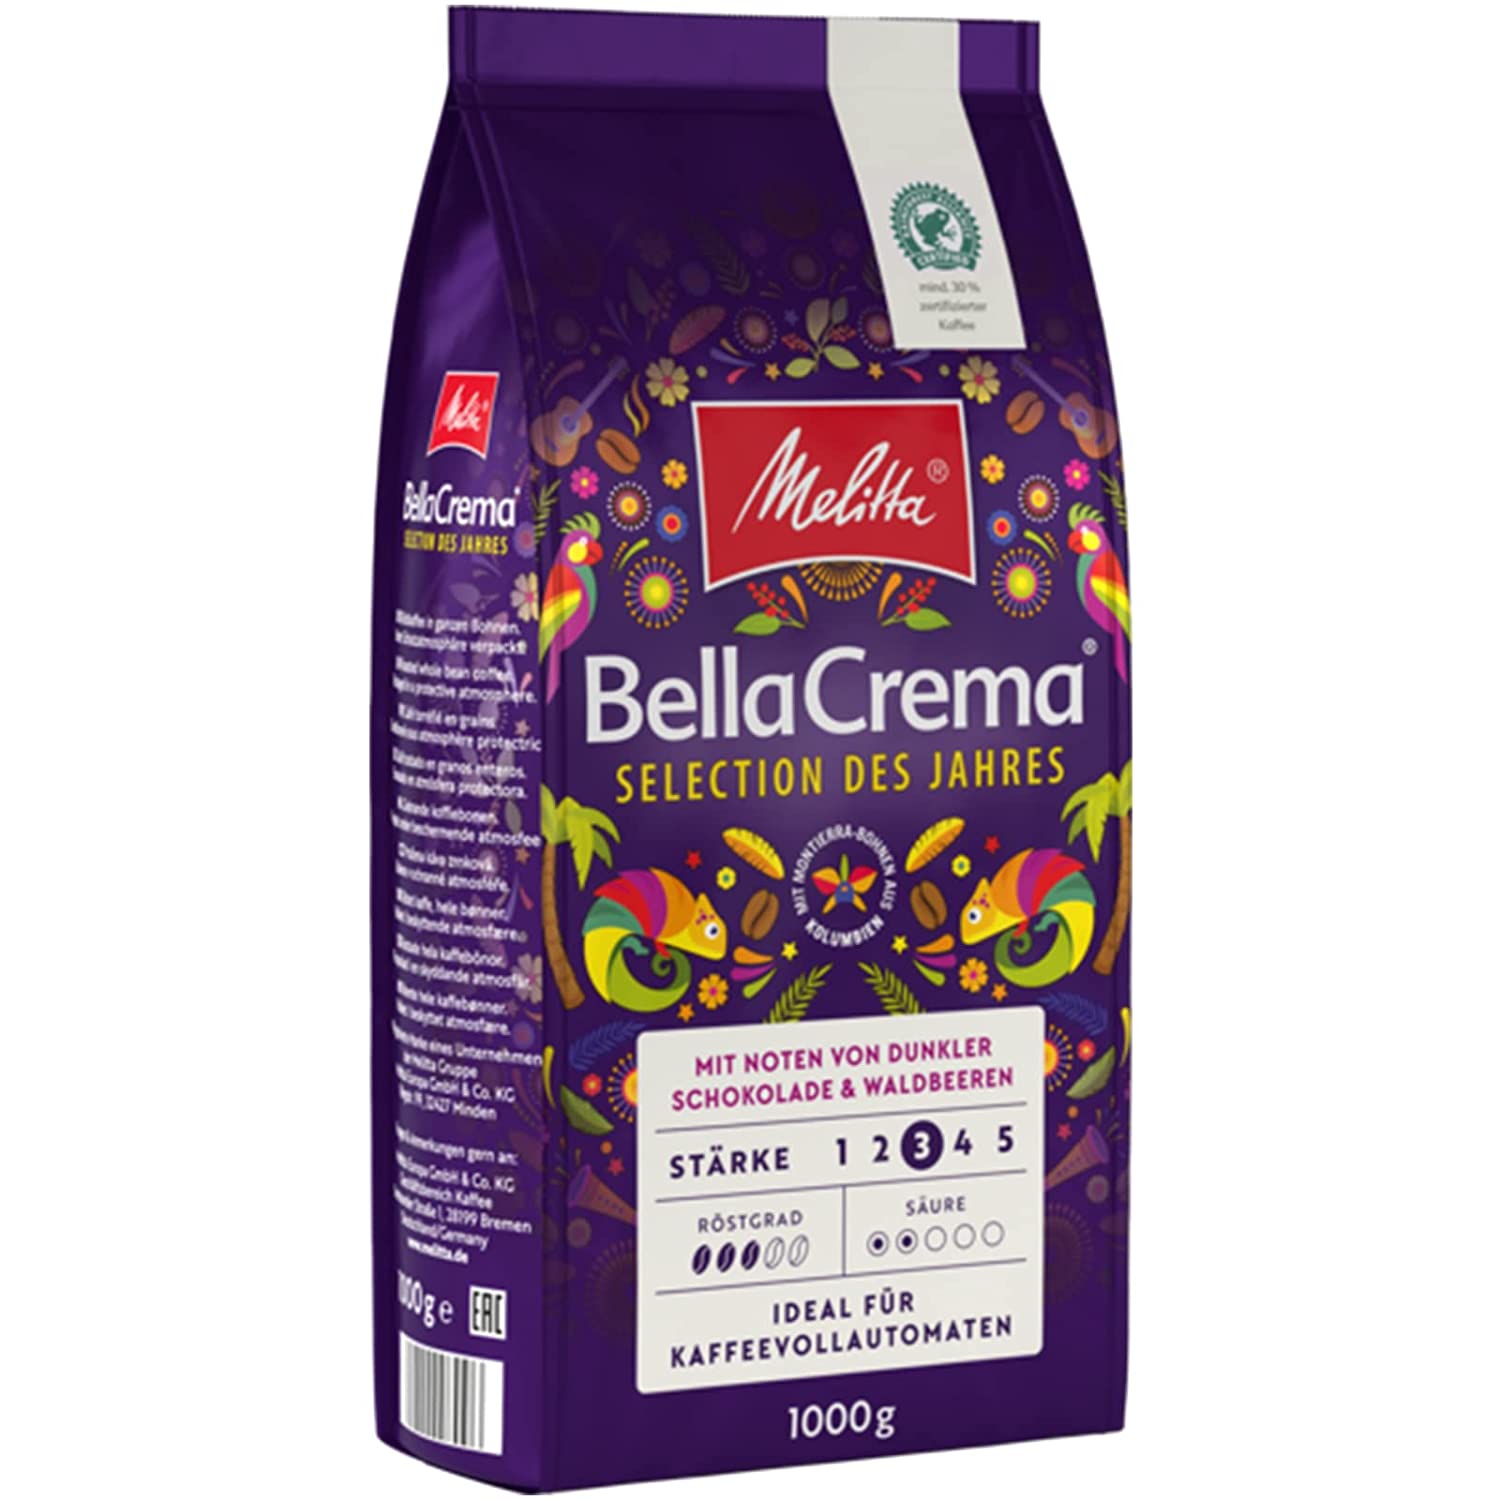 Melitta Whole Coffee Beans, 100% Arabica, Soft Aroma with Mango, Medium Roast, Grade 3, Melitta BellaCrema, Selection of the Year 2019, 1kg